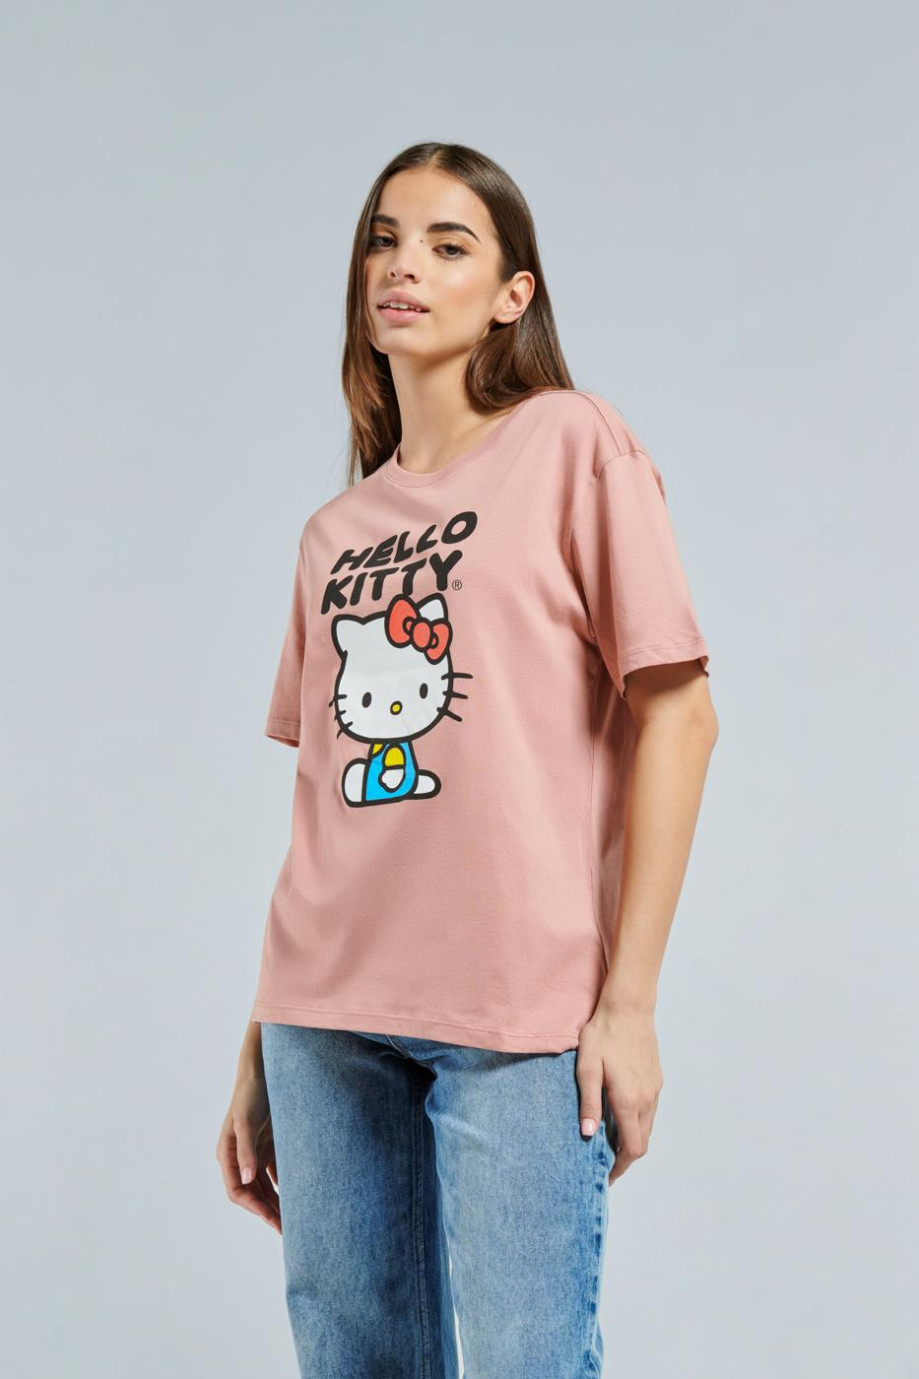 Camiseta rosada clara con manga corta, diseño de Hello Kitty y hombro rodado